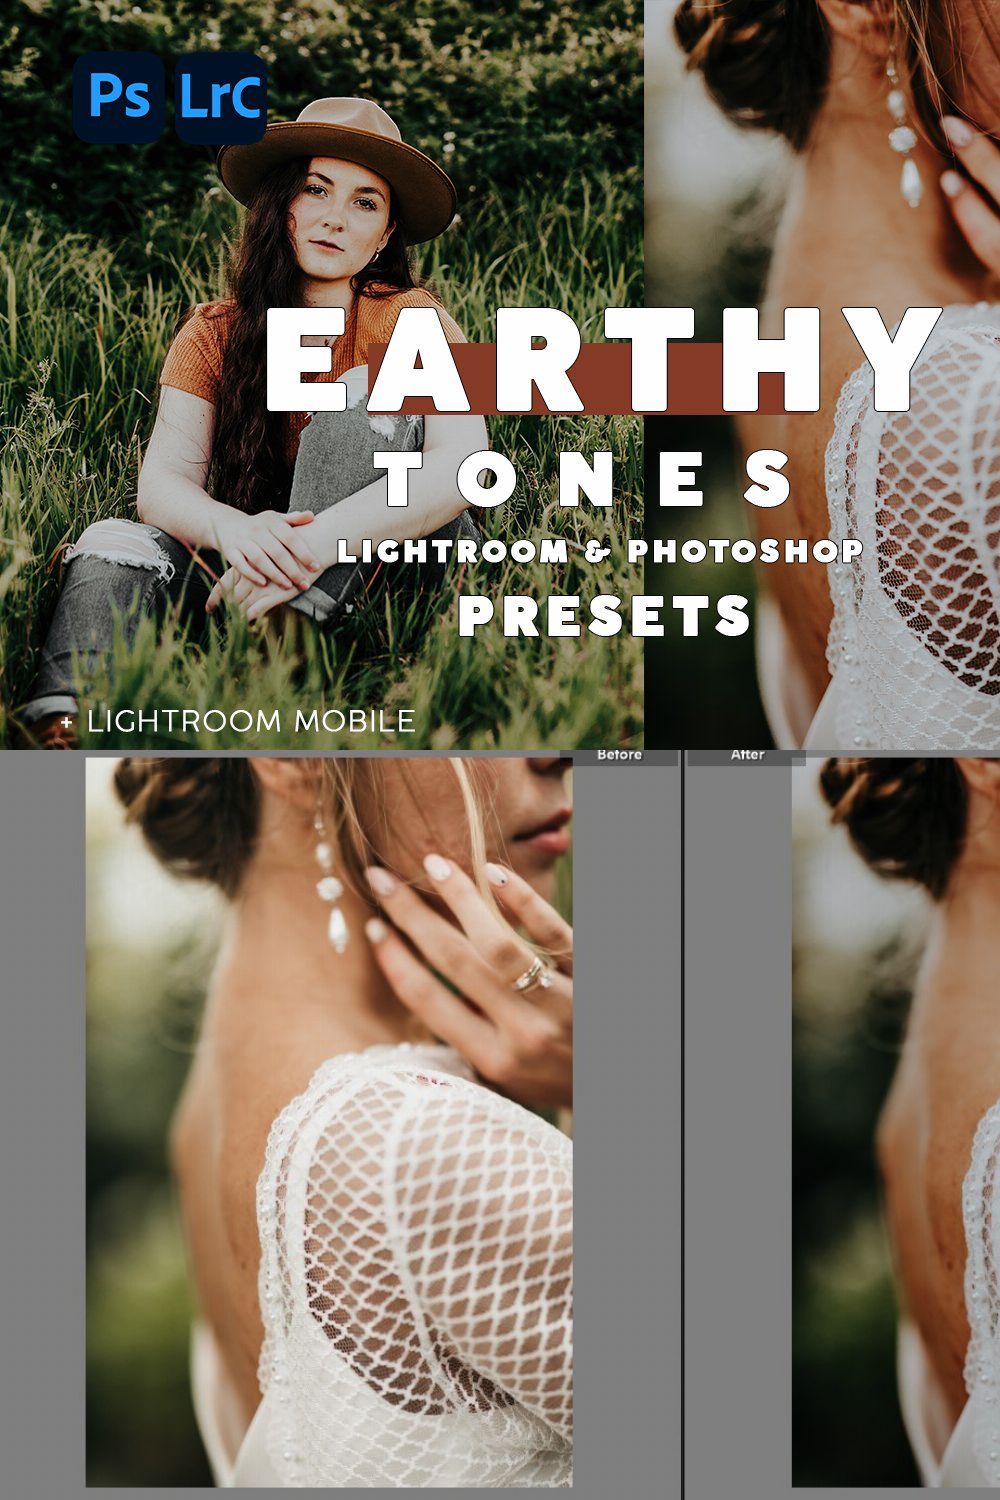 Earthy Tones - Lightroom Presets pinterest preview image.